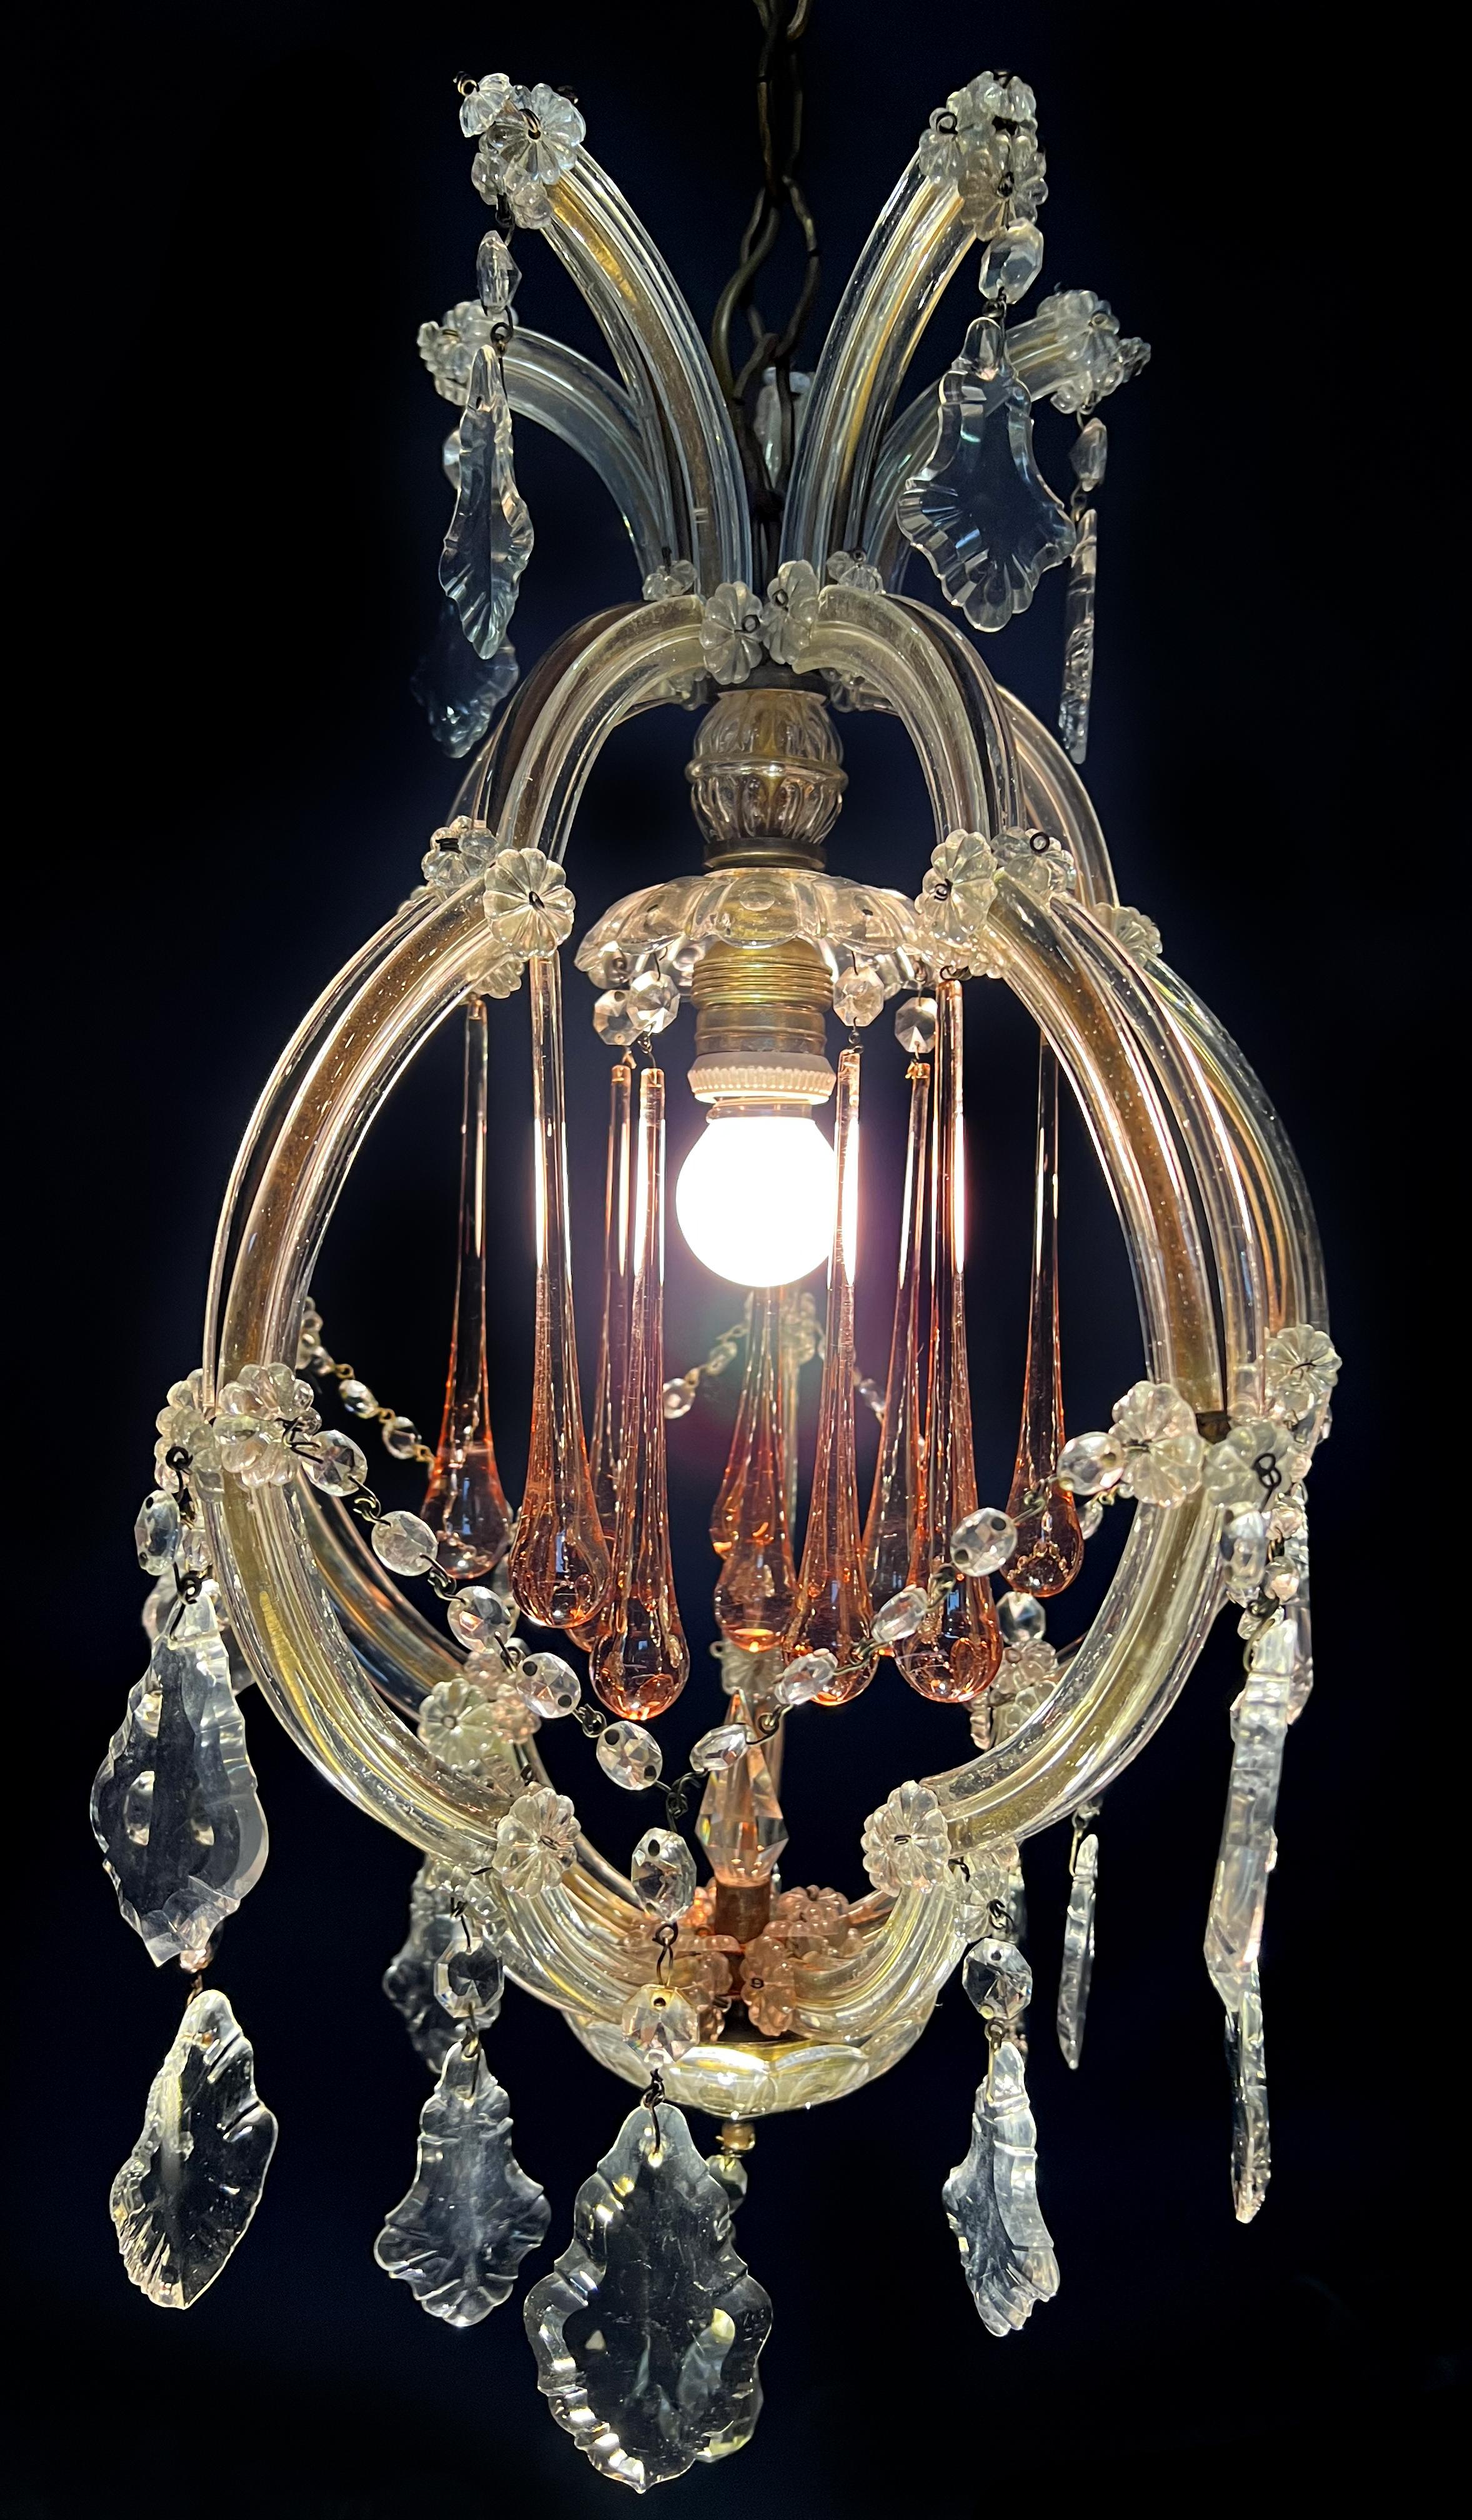 Trio Murano chandelier:
1) Height 100 cm, diameter 24 cm. Height without the chain 50 cm
2) Height 76 cm, diameter 34 cm. 
3) Height 100 cm, diameter 50 cm. Height without the chain 60 cm